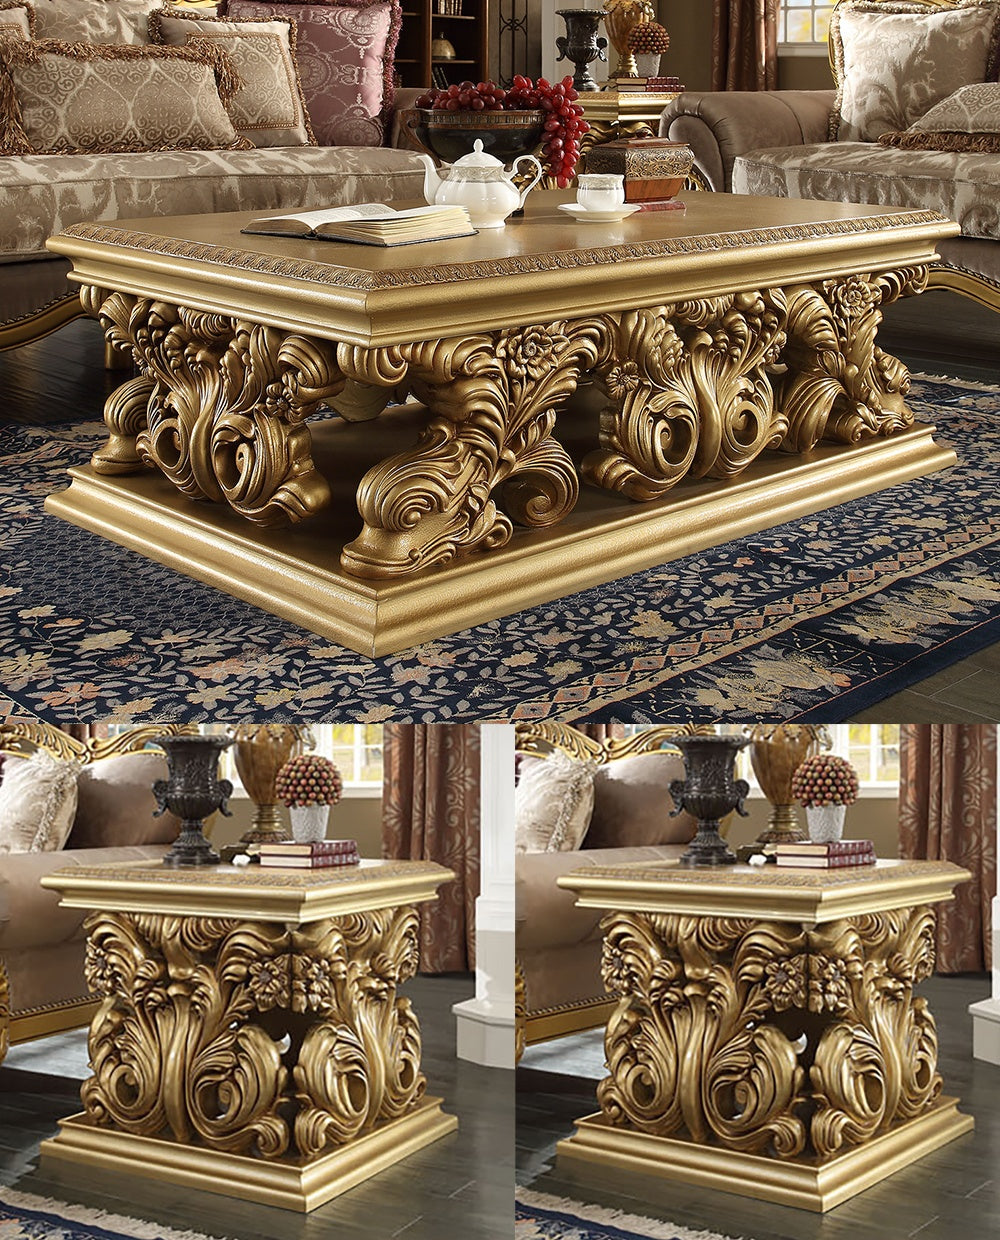 3 PC Coffee Table Set in Metallic Bright Gold Finish 8016-CTSET3 European Victorian